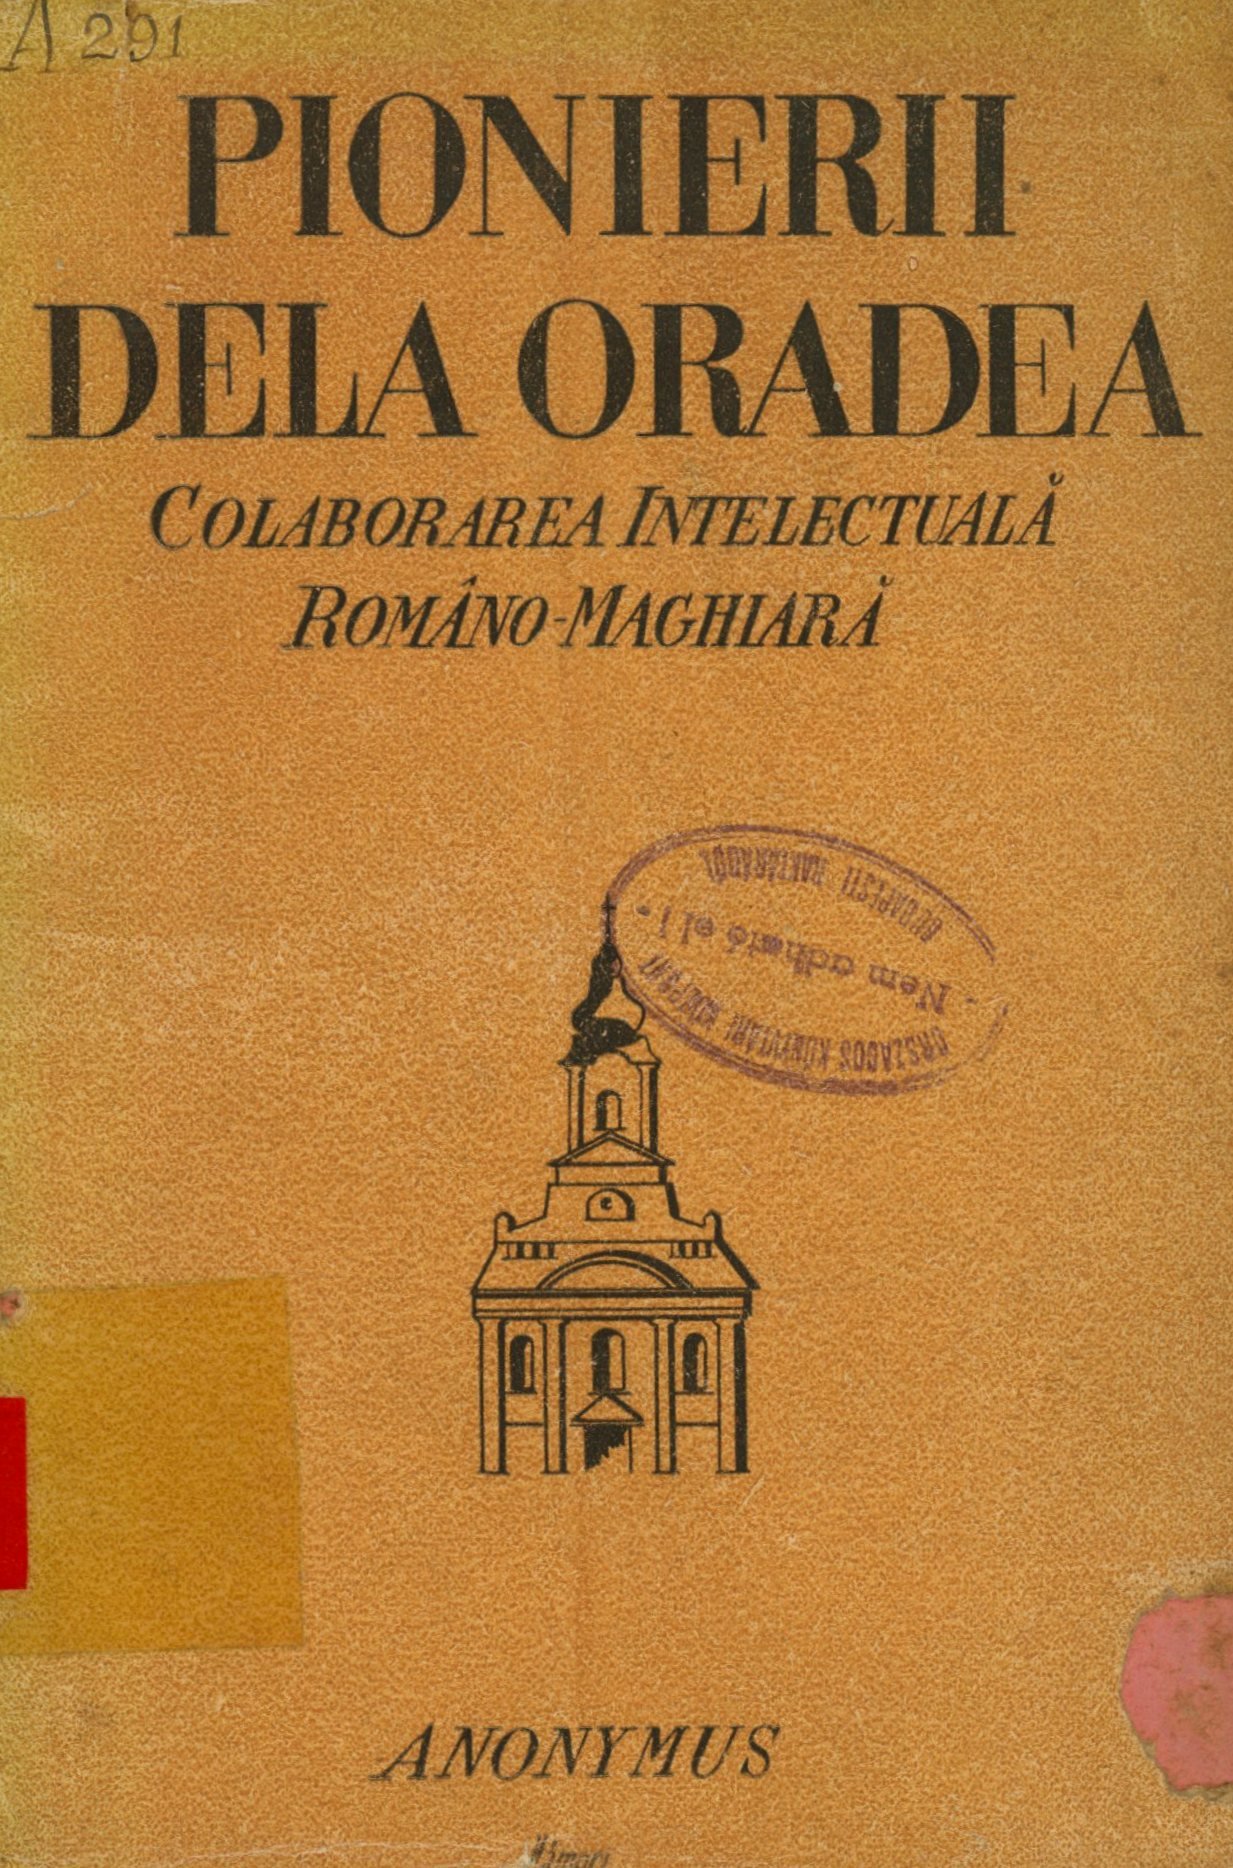 Pionierii Dela Oradea (Erkel Ferenc Területi Múzeum, Gyula CC BY-NC-SA)